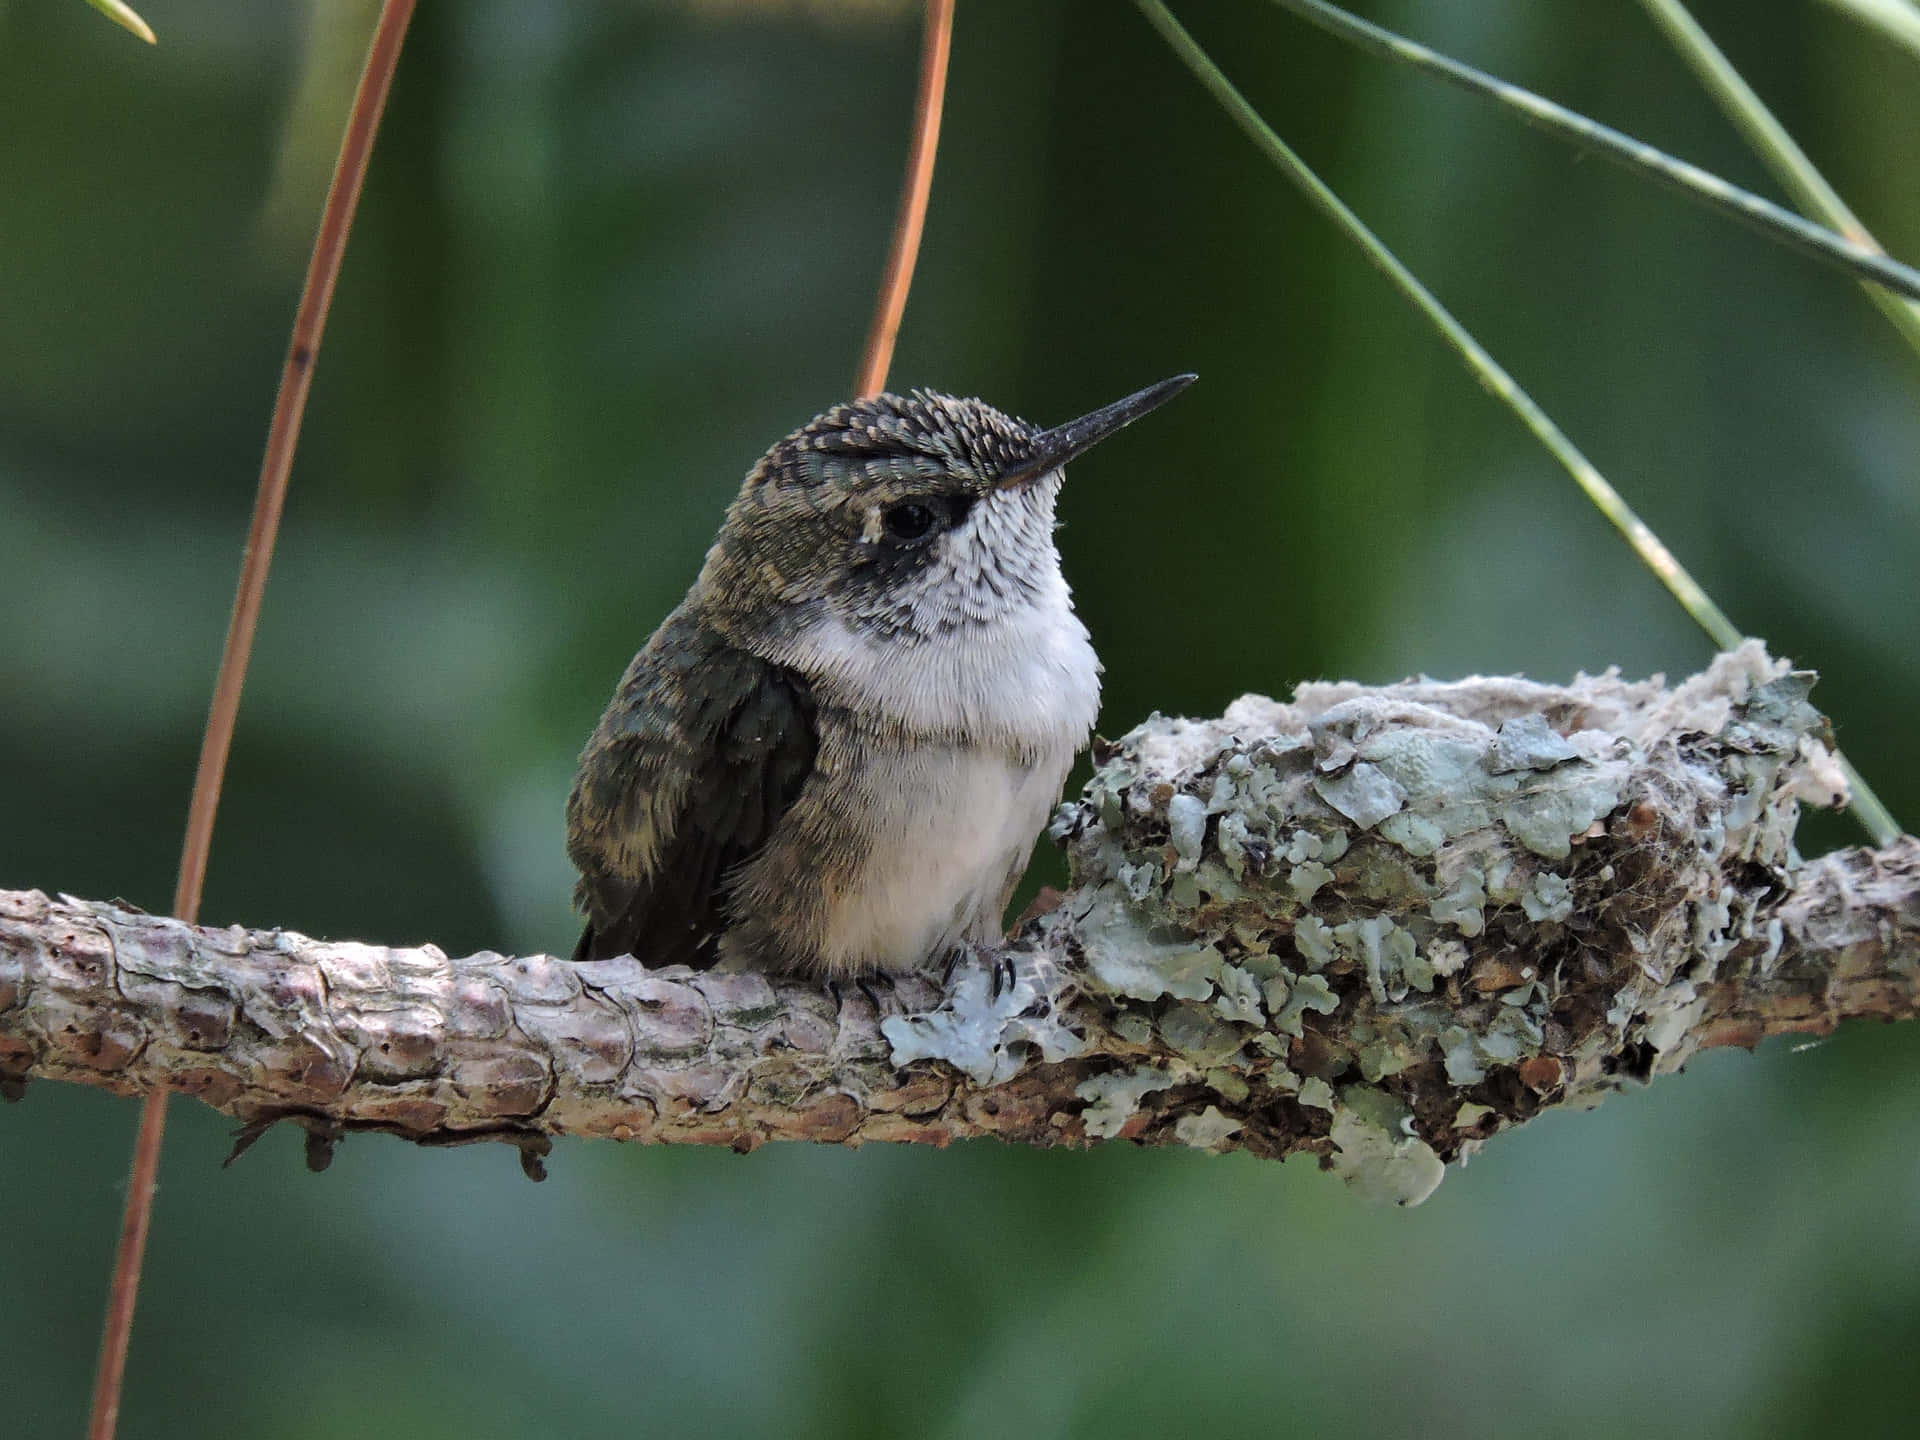 A Closeup of a Hummingbird Nest